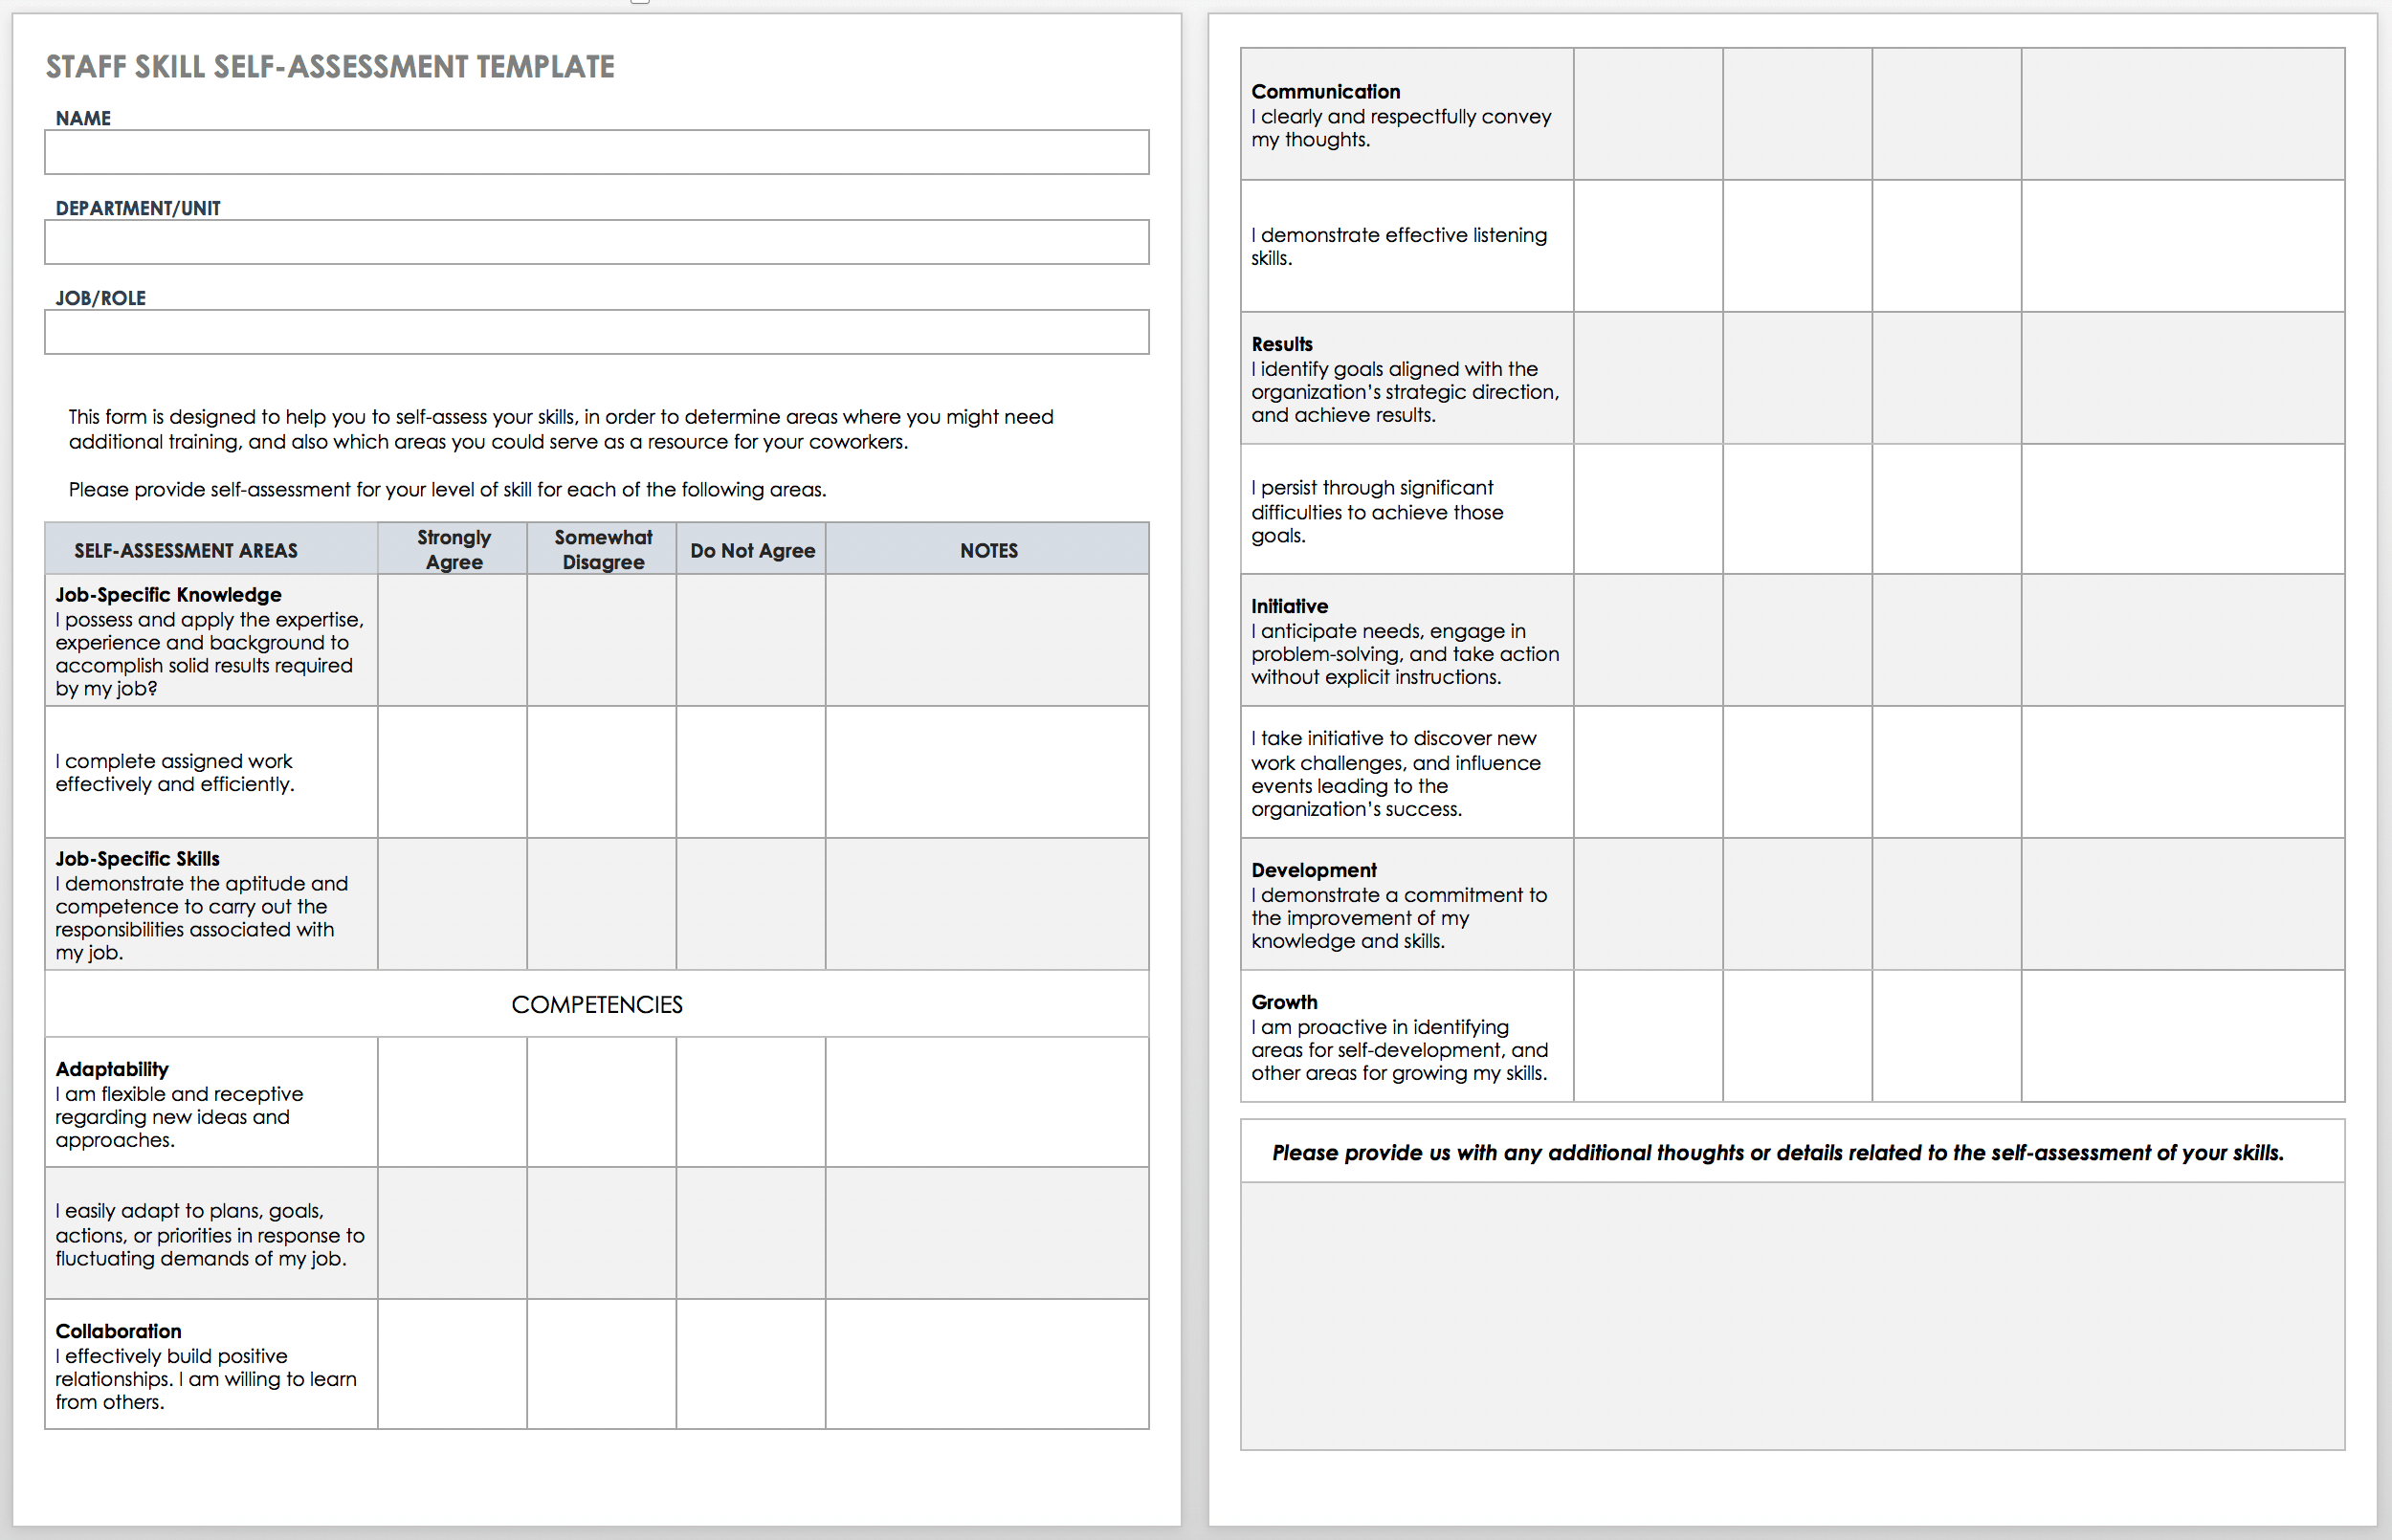 Free Self-Evaluation Templates | Smartsheet within Free Employee Self Evaluation Forms Printable